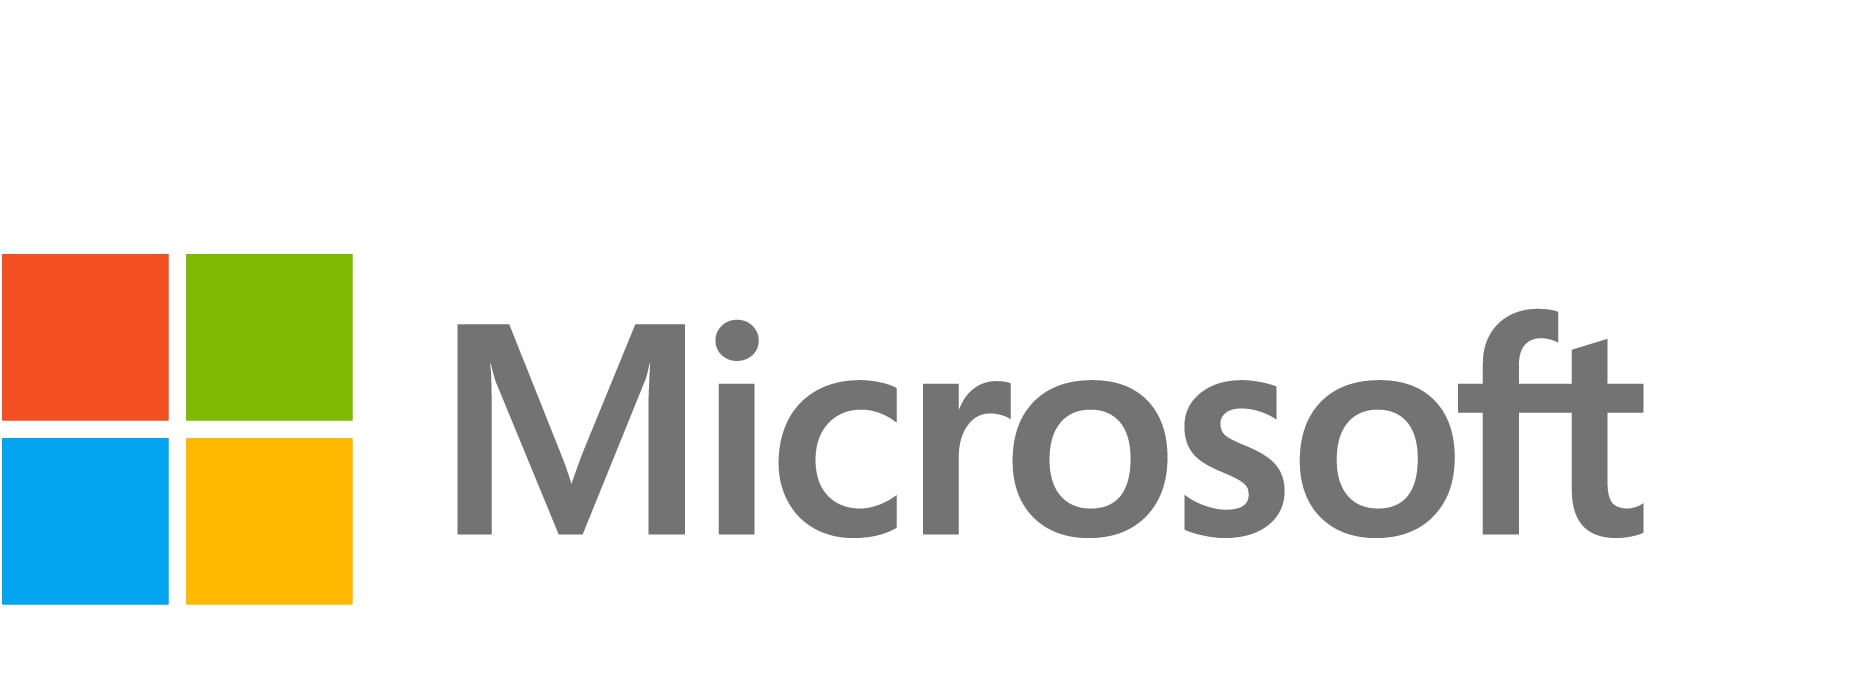 Microsoft Dynamics 365 for Customer Service Digital Messaging Add-on - subscription license - 1 user